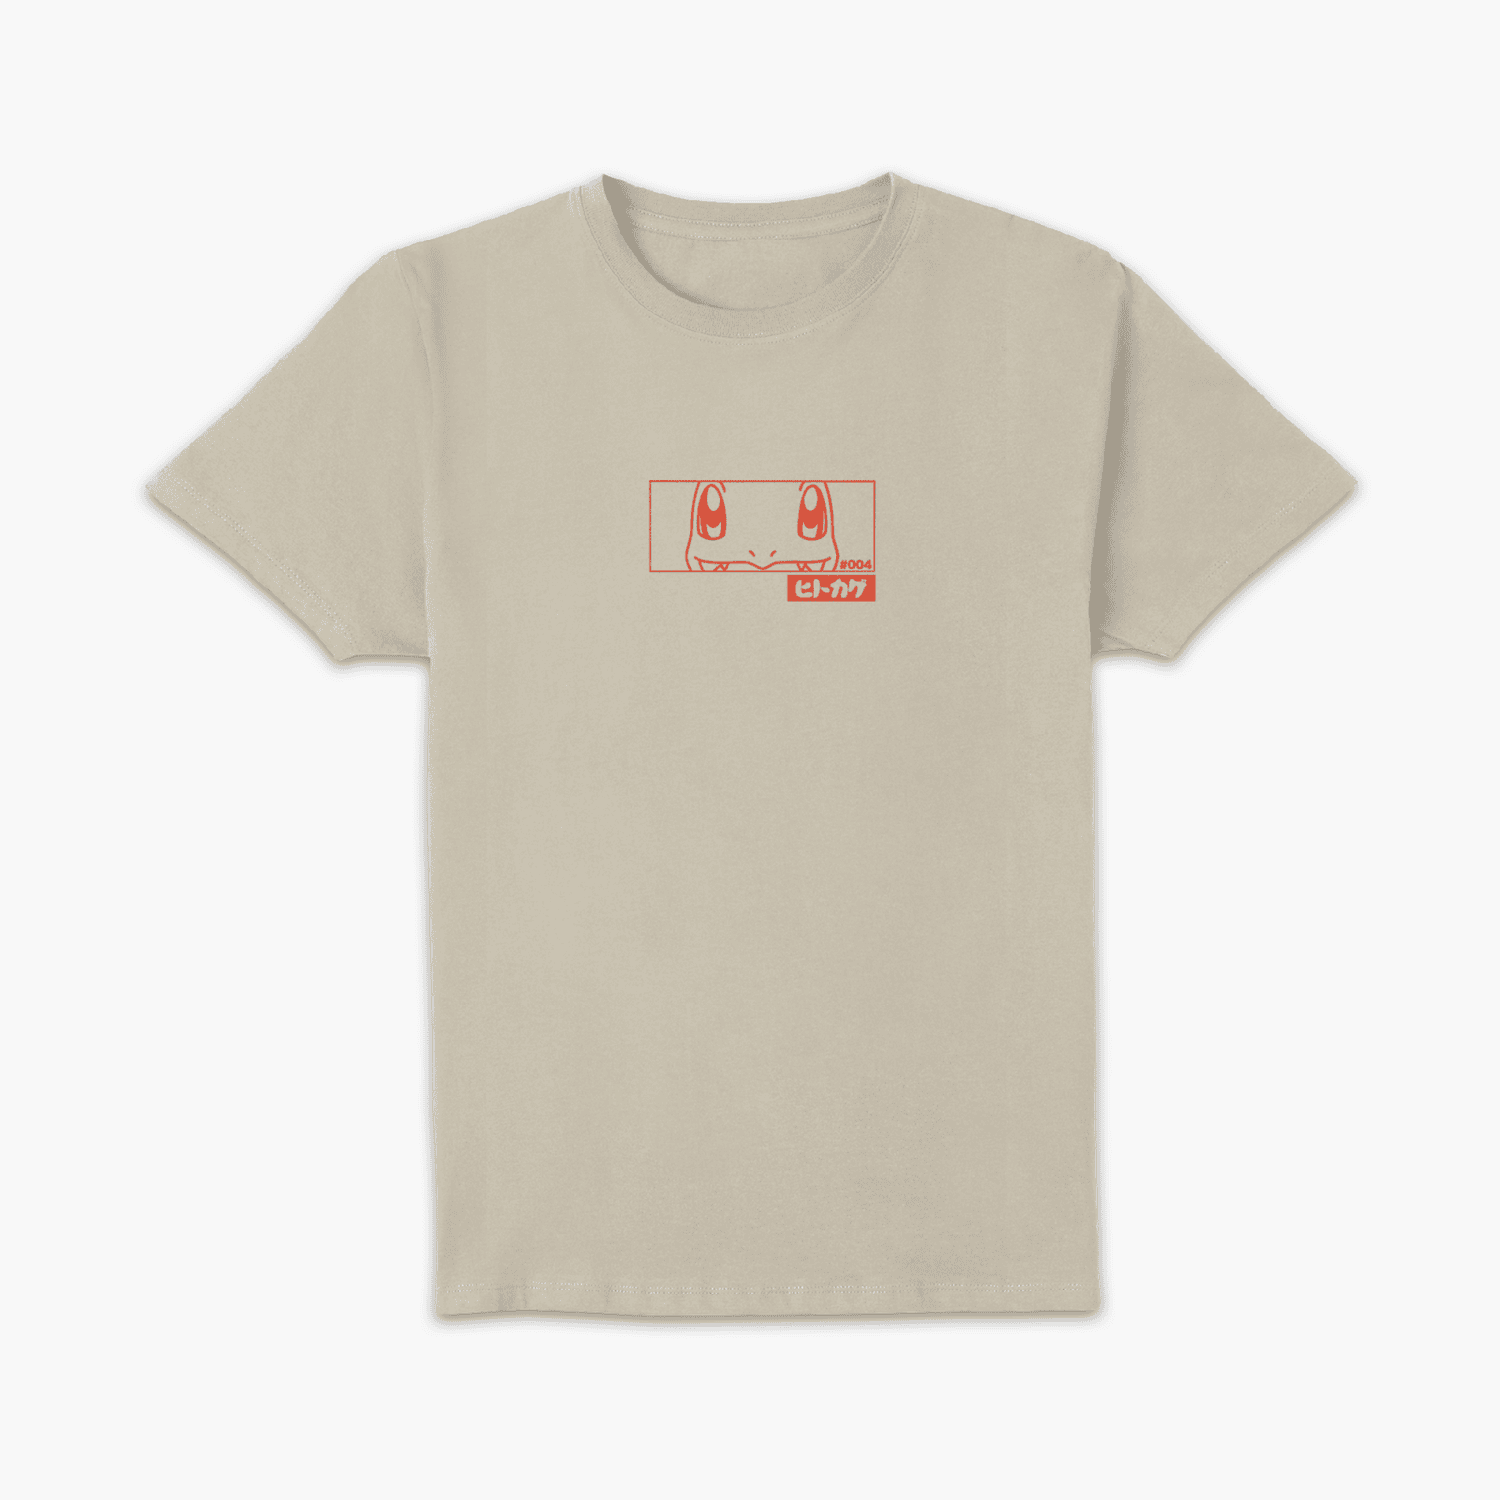 Pokémon Charmander Evo Unisex T-Shirt - Cream